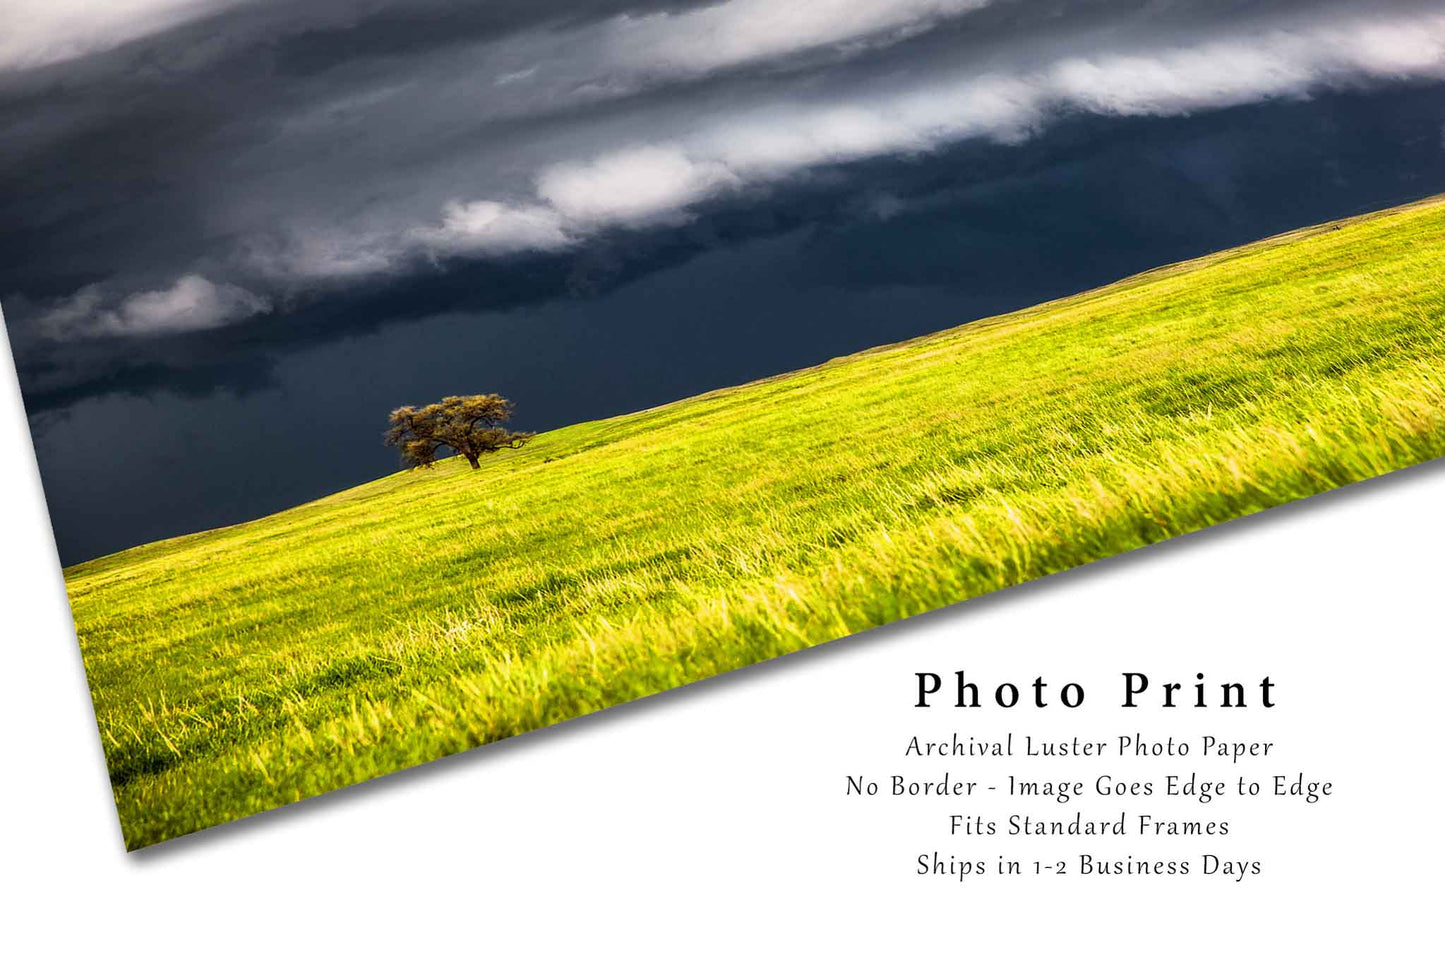 Storm Photography Print | Lone Tree Picture | Thunderstorm Wall Art | Nebraska Photo | Great Plains Decor | Not Framed